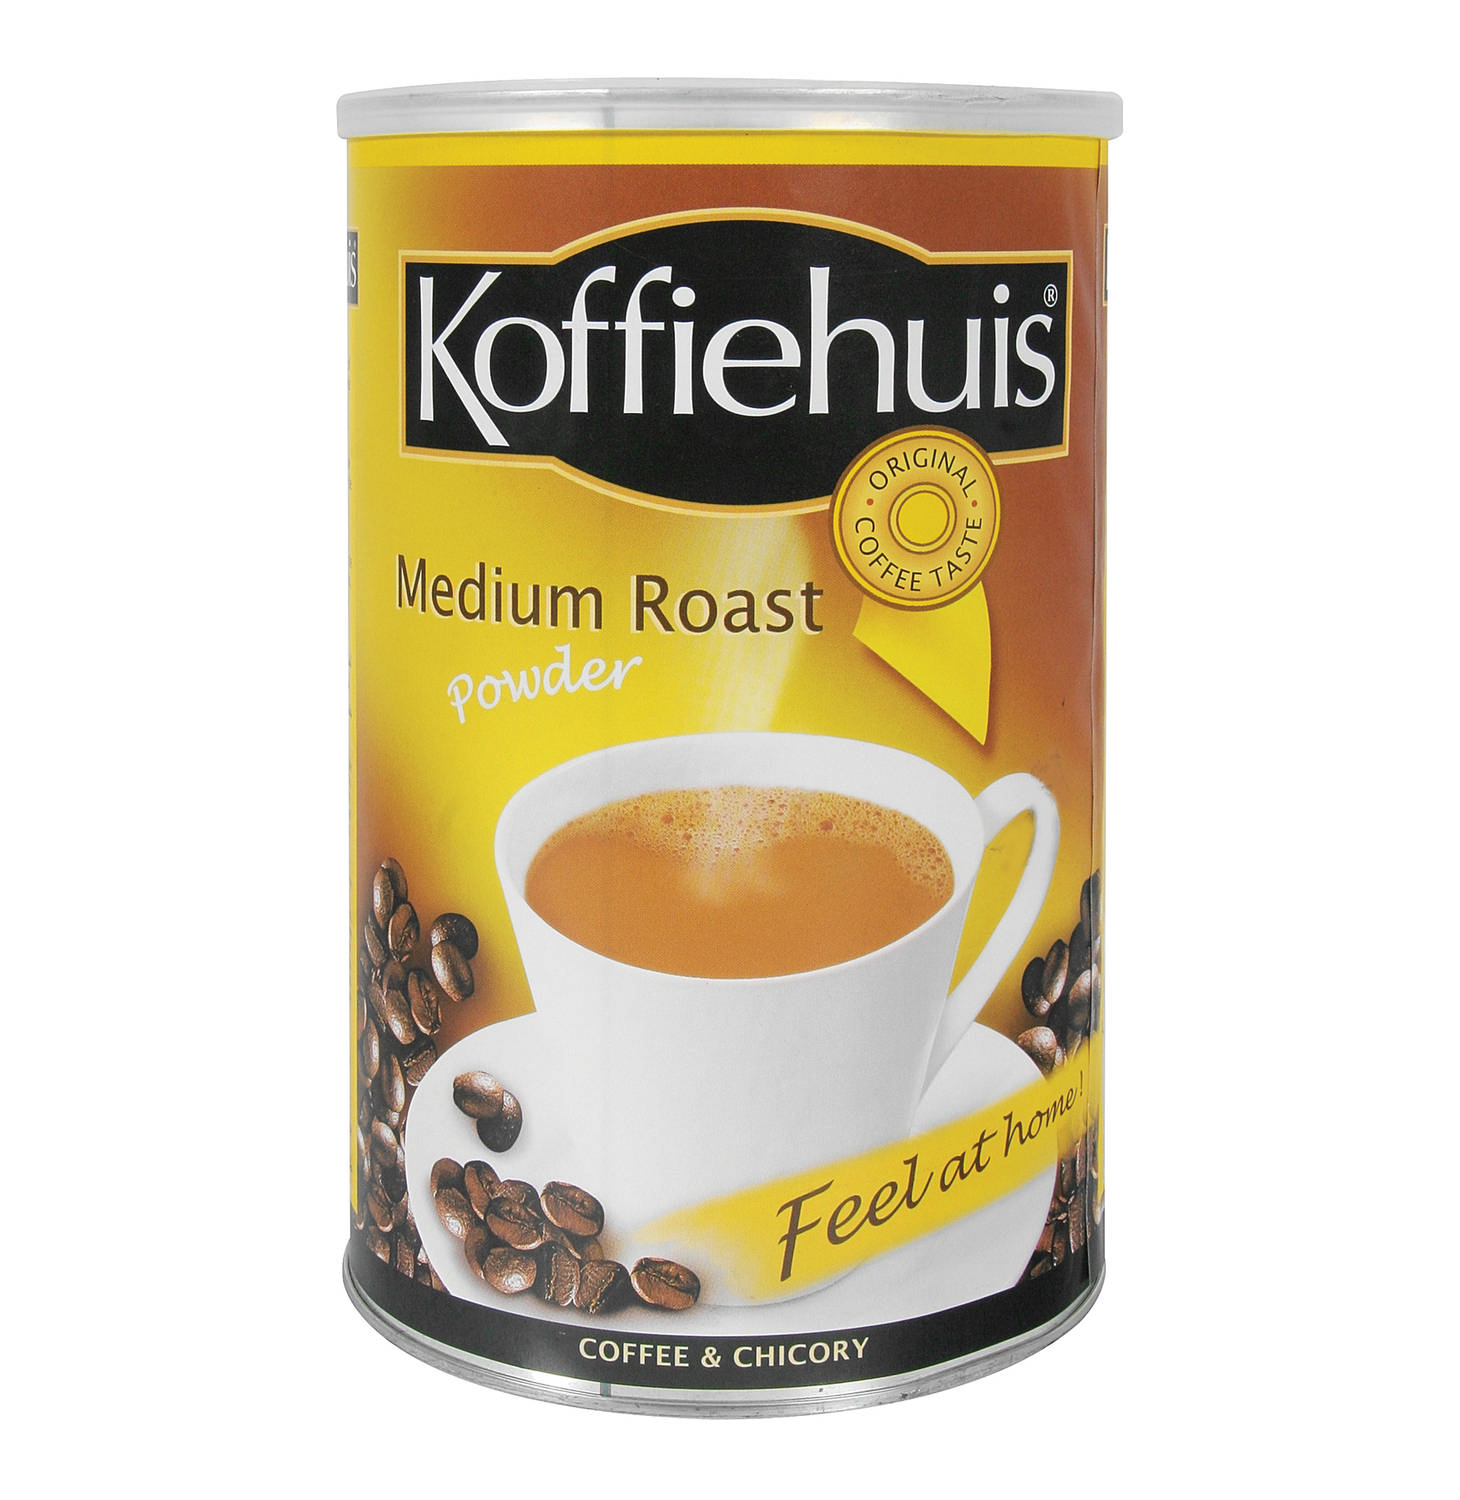 Koffiehuis Coffee 750g - Medium Roast